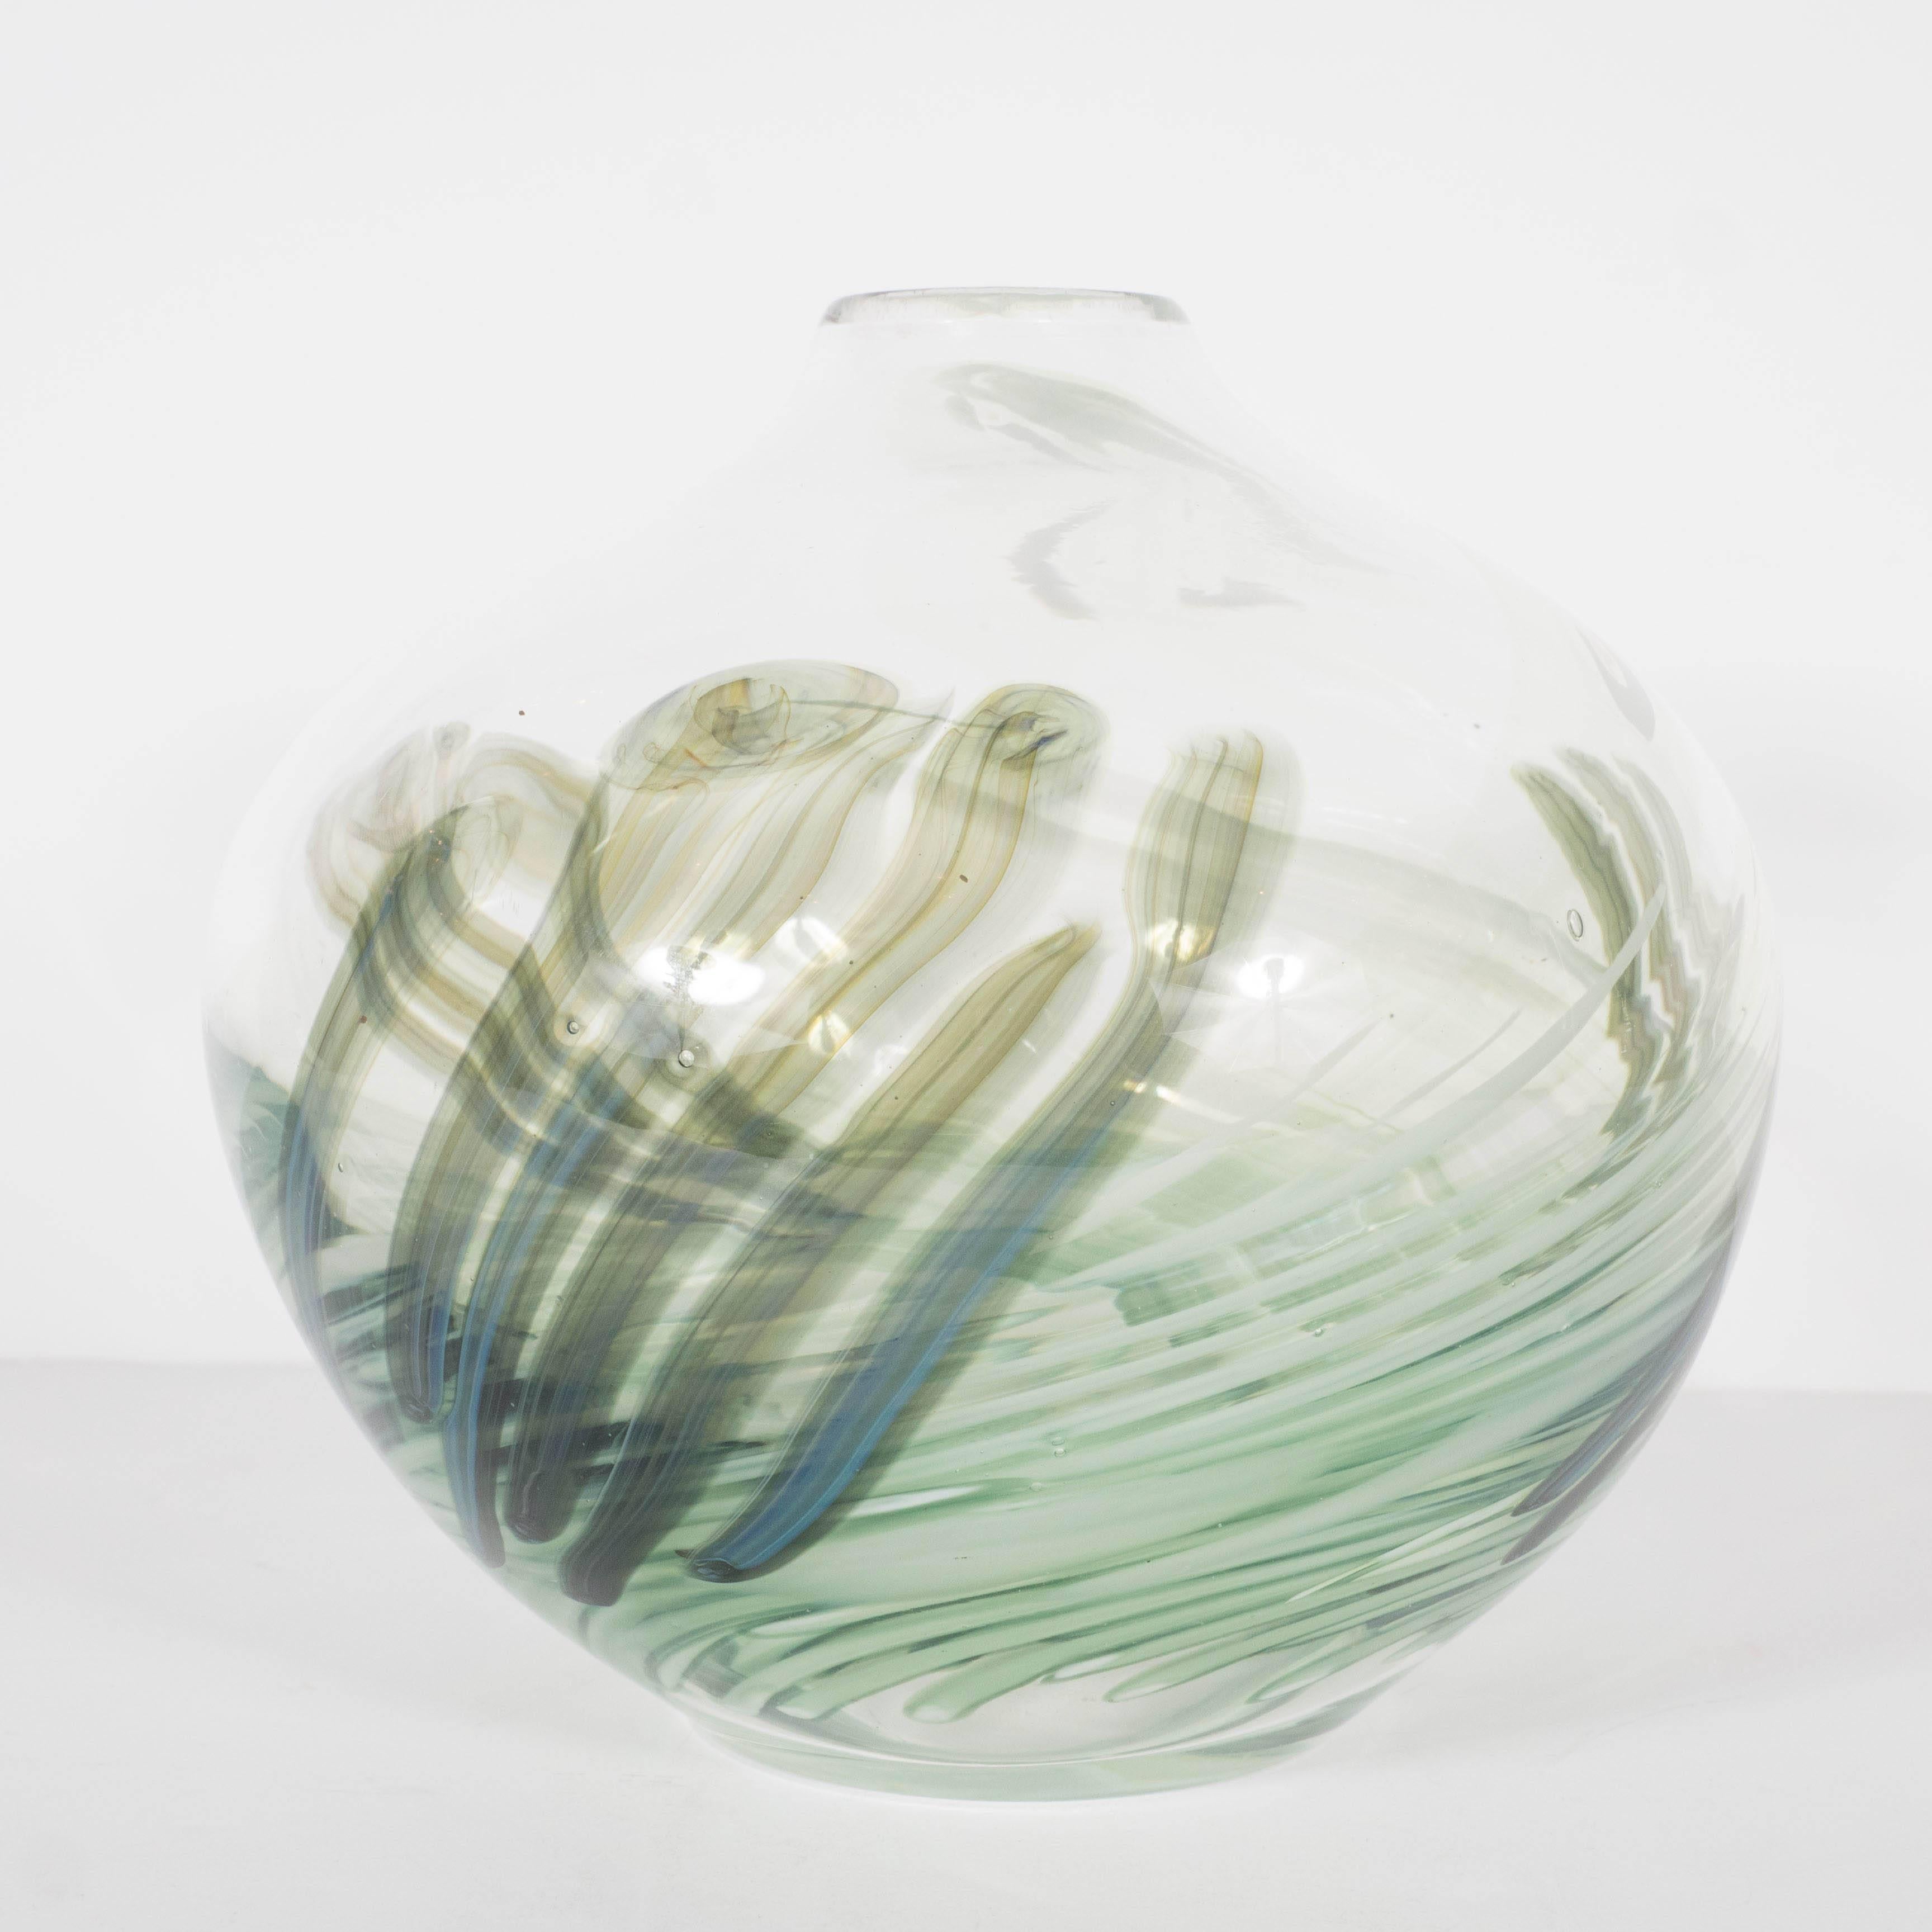 Gorgeous Handblown Urrere and Perkins Studios Art Glass Vase 2